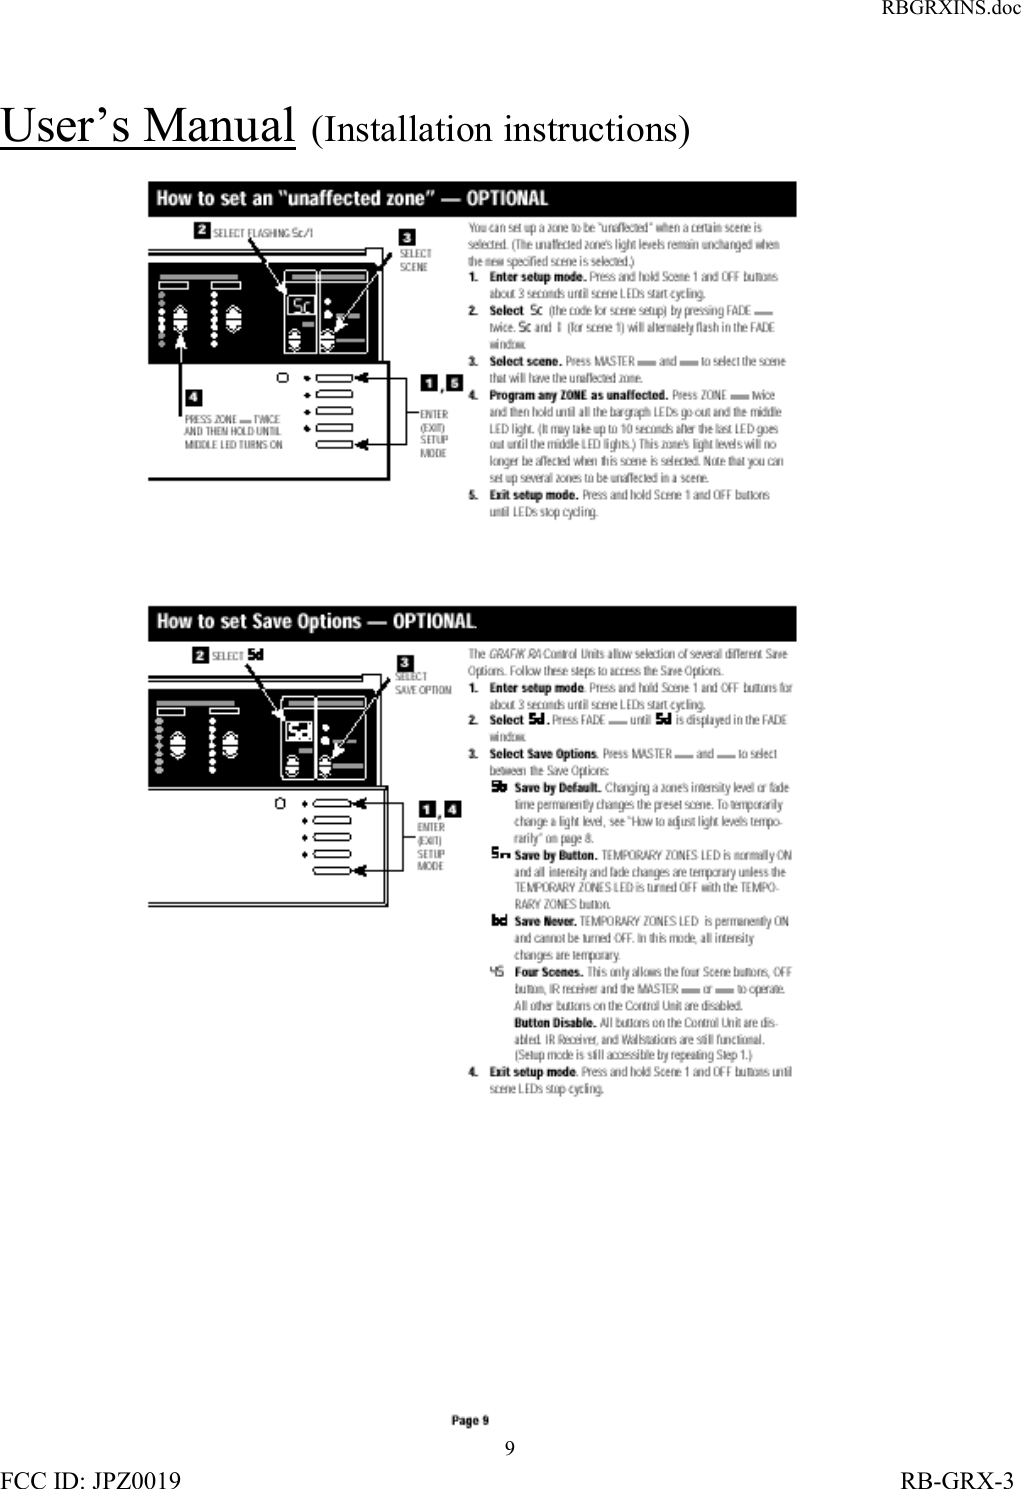 RBGRXINS.docFCC ID: JPZ0019                                                                                                                   RB-GRX-39User’s Manual  (Installation instructions)